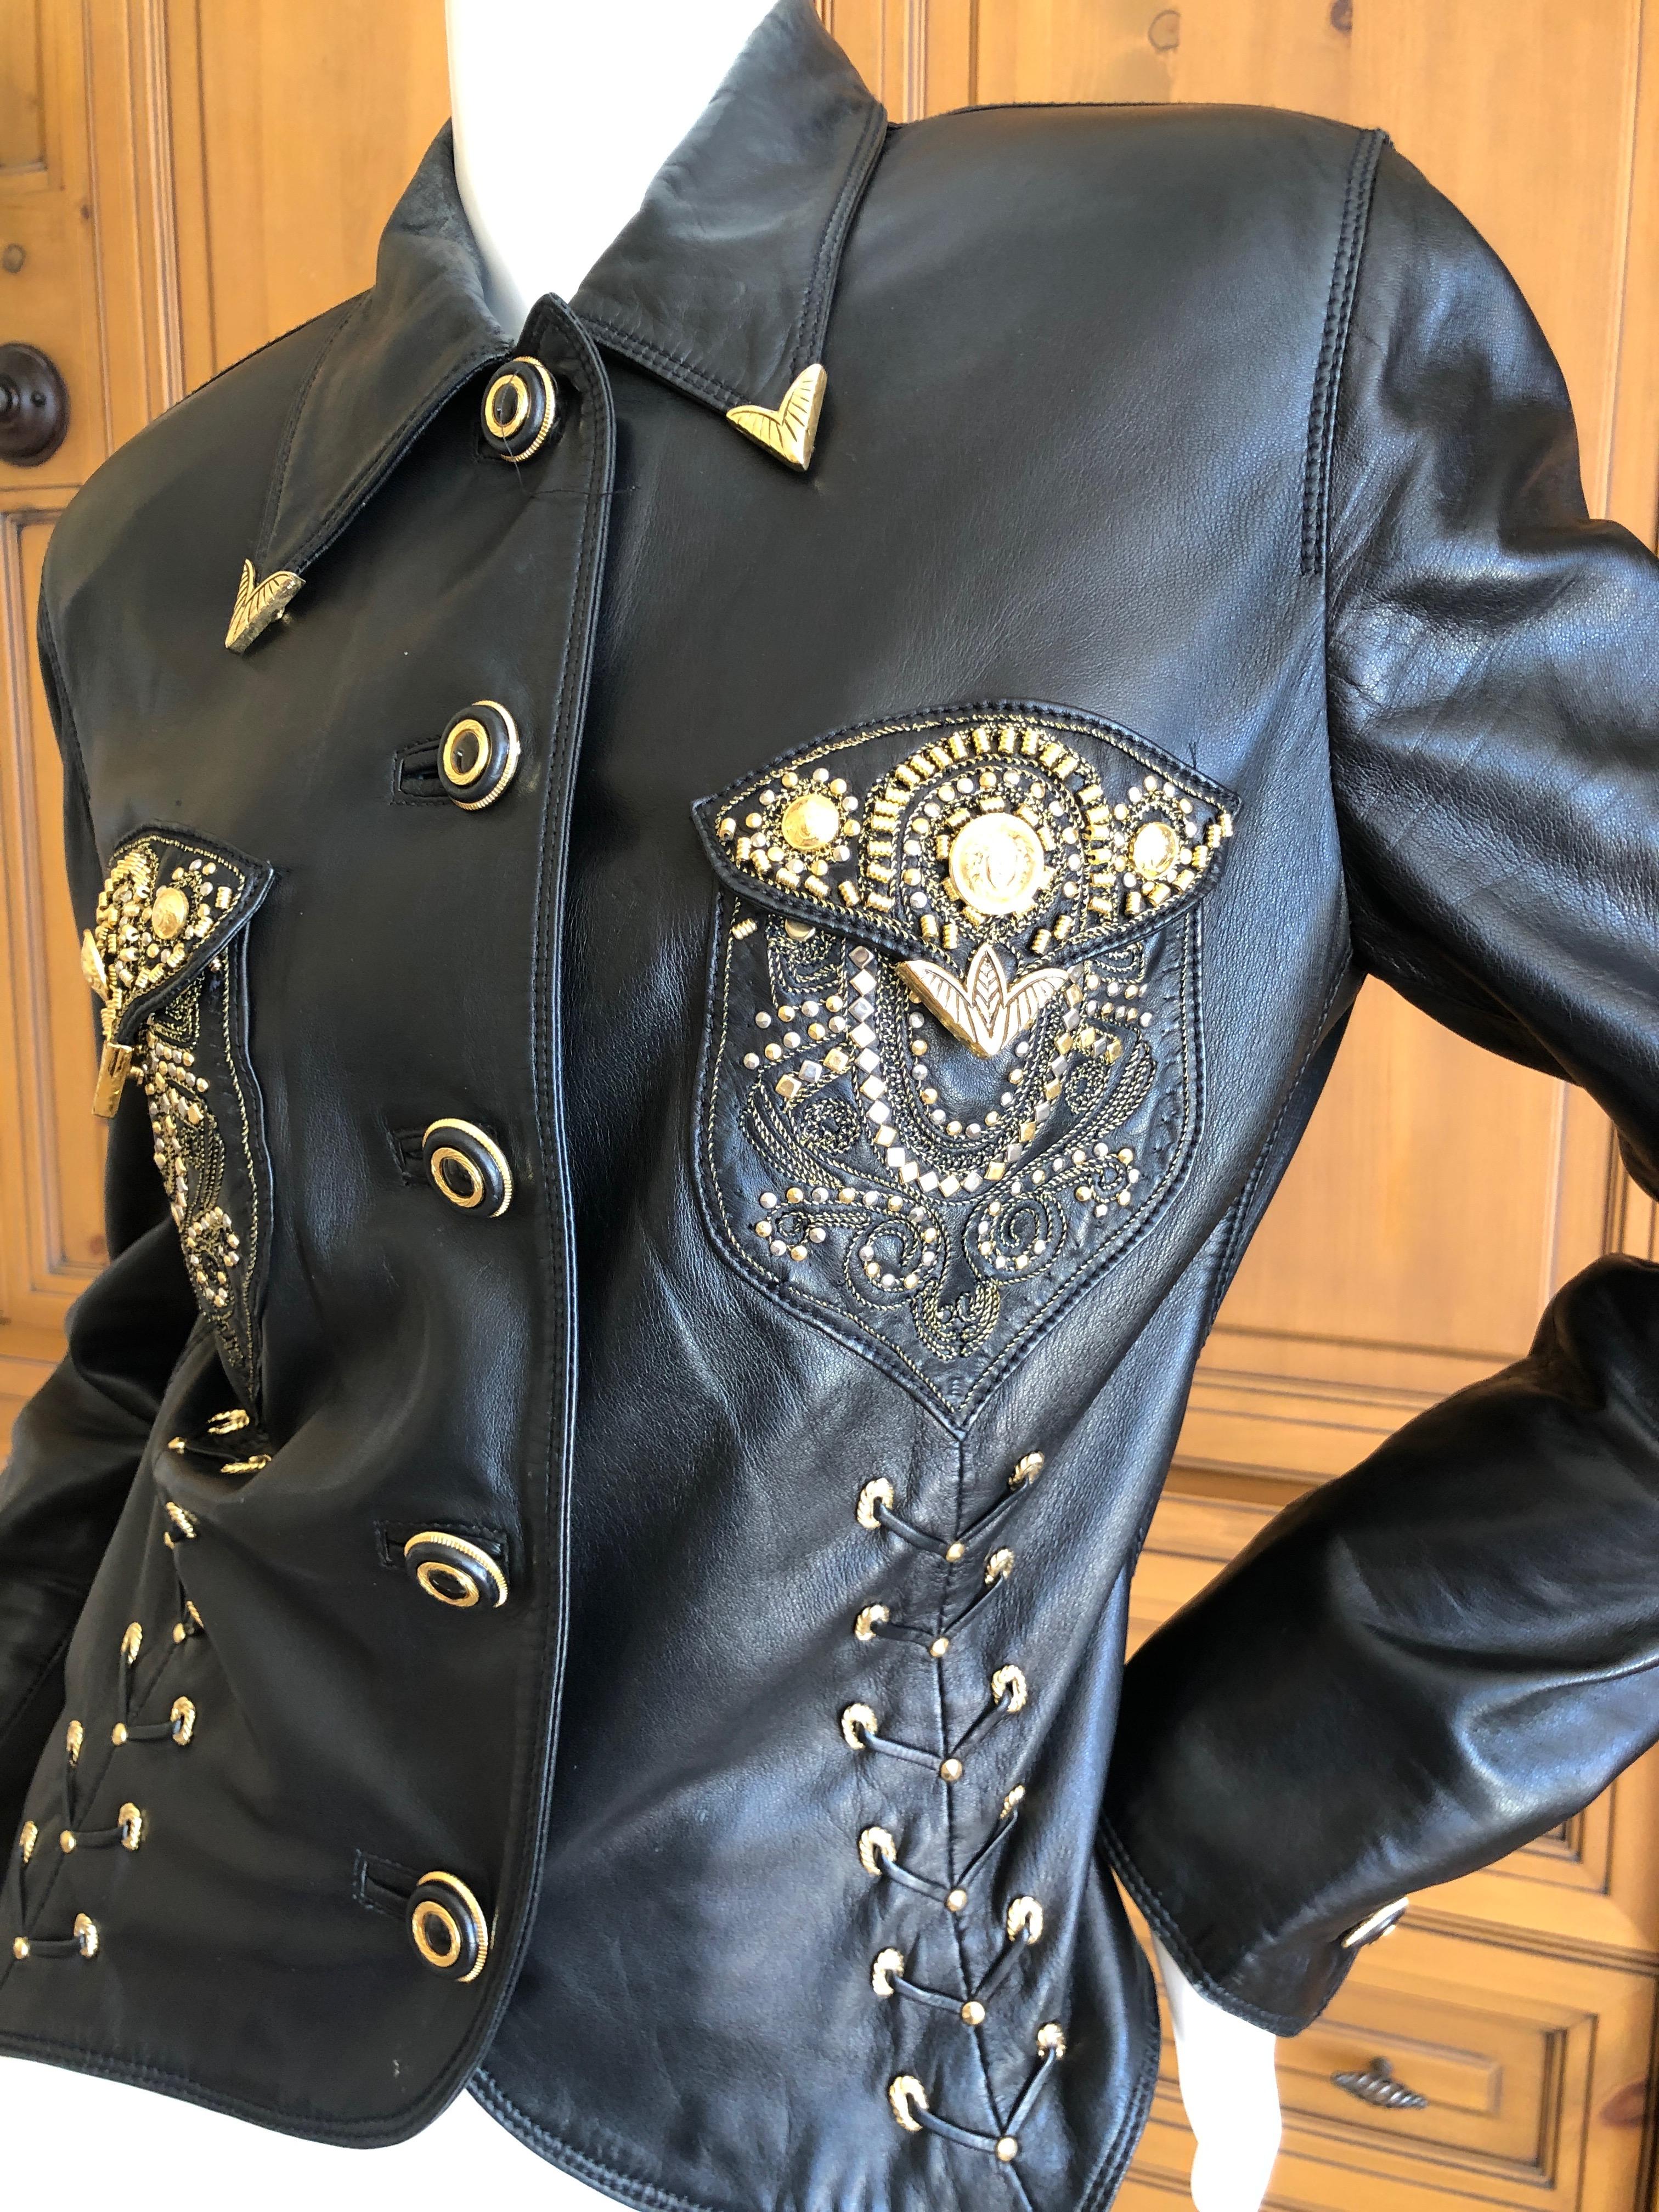 Gianni Versace 1990 Lambskin Leather Moto Jacket with Gold Embellishment 2